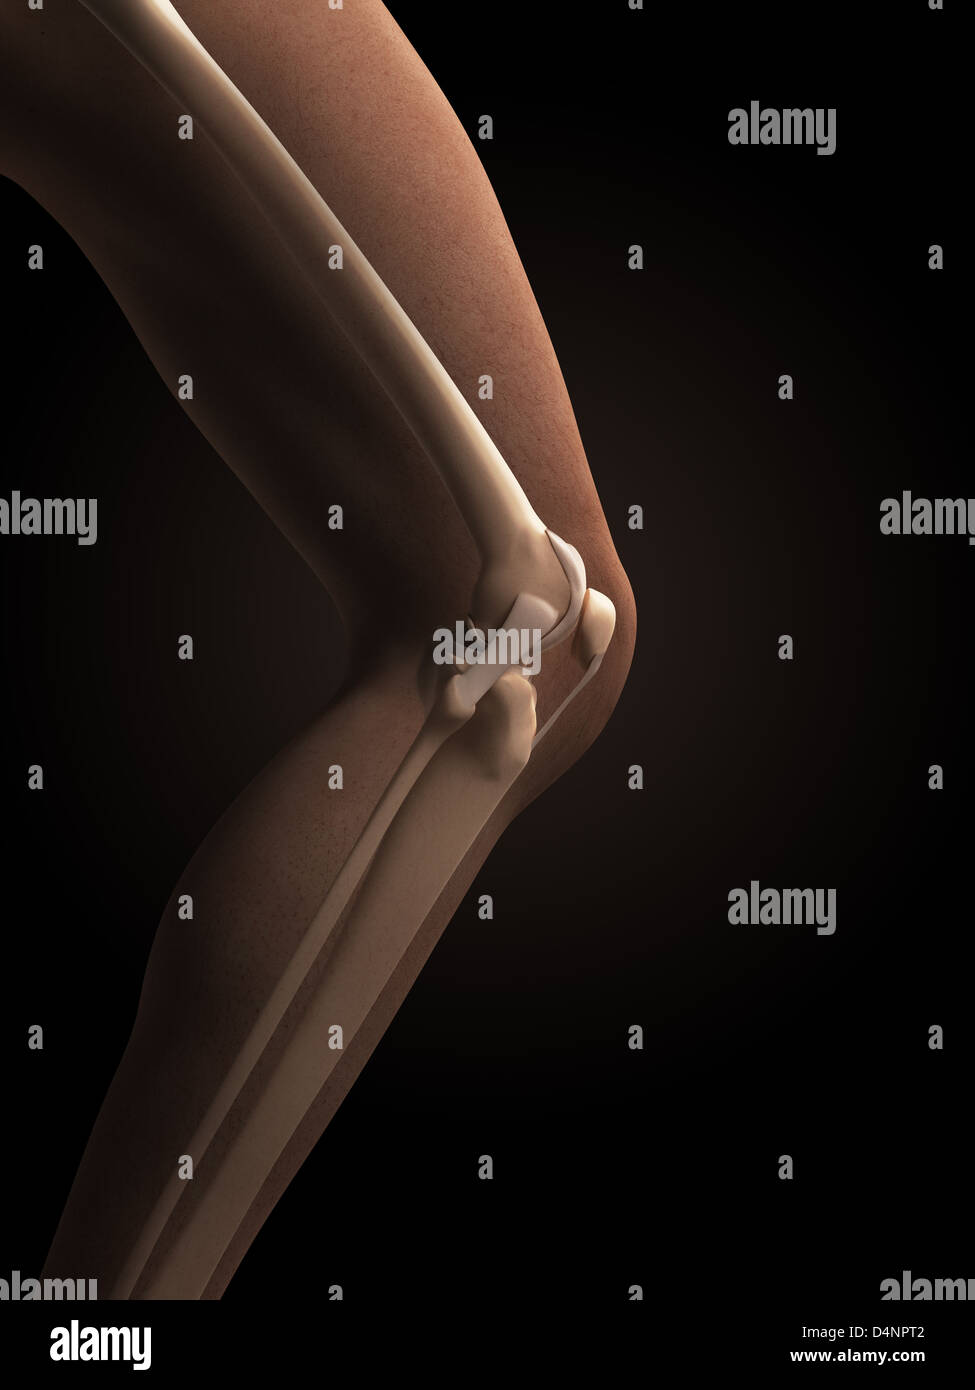 Anatomy of the knee Stock Photo